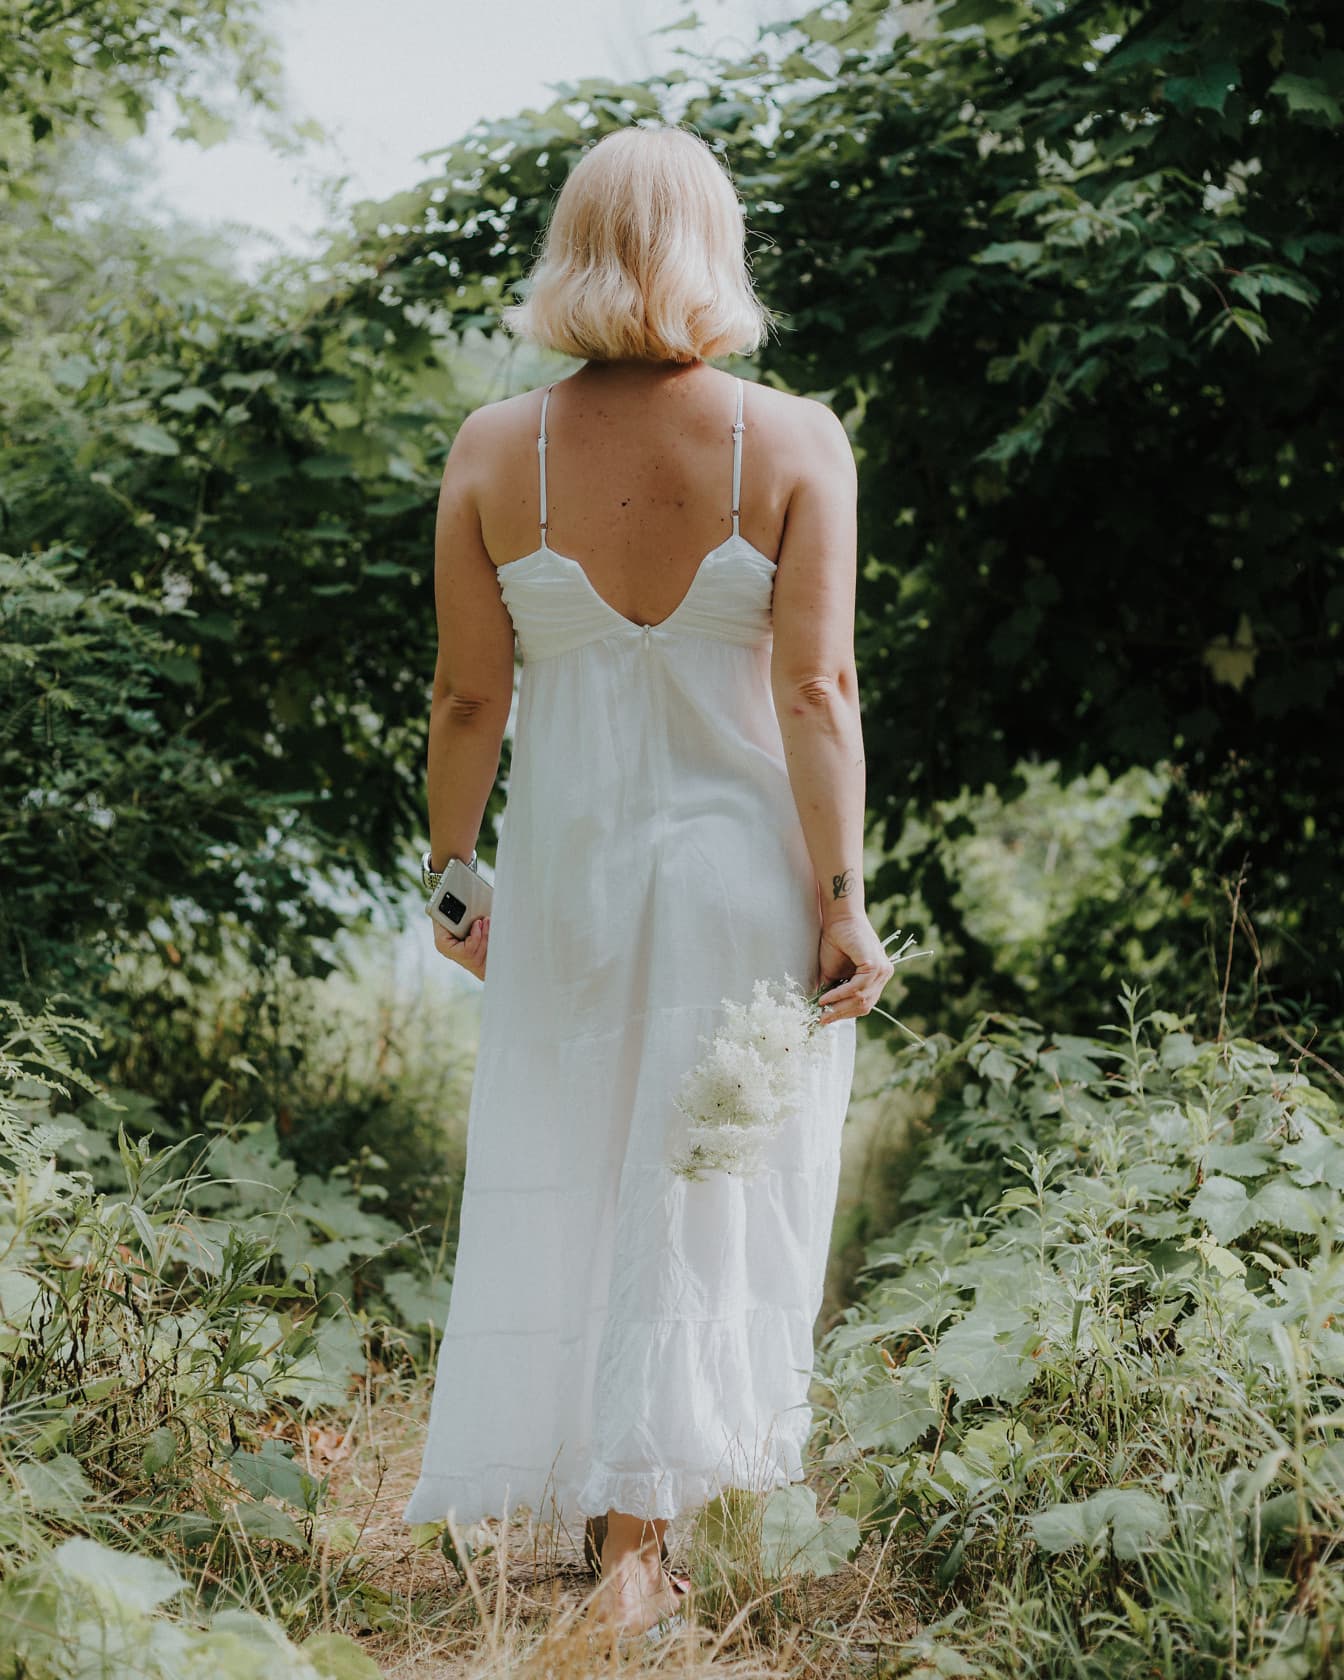 Gaun katun putih elegan pada pirang muda berjalan di hutan